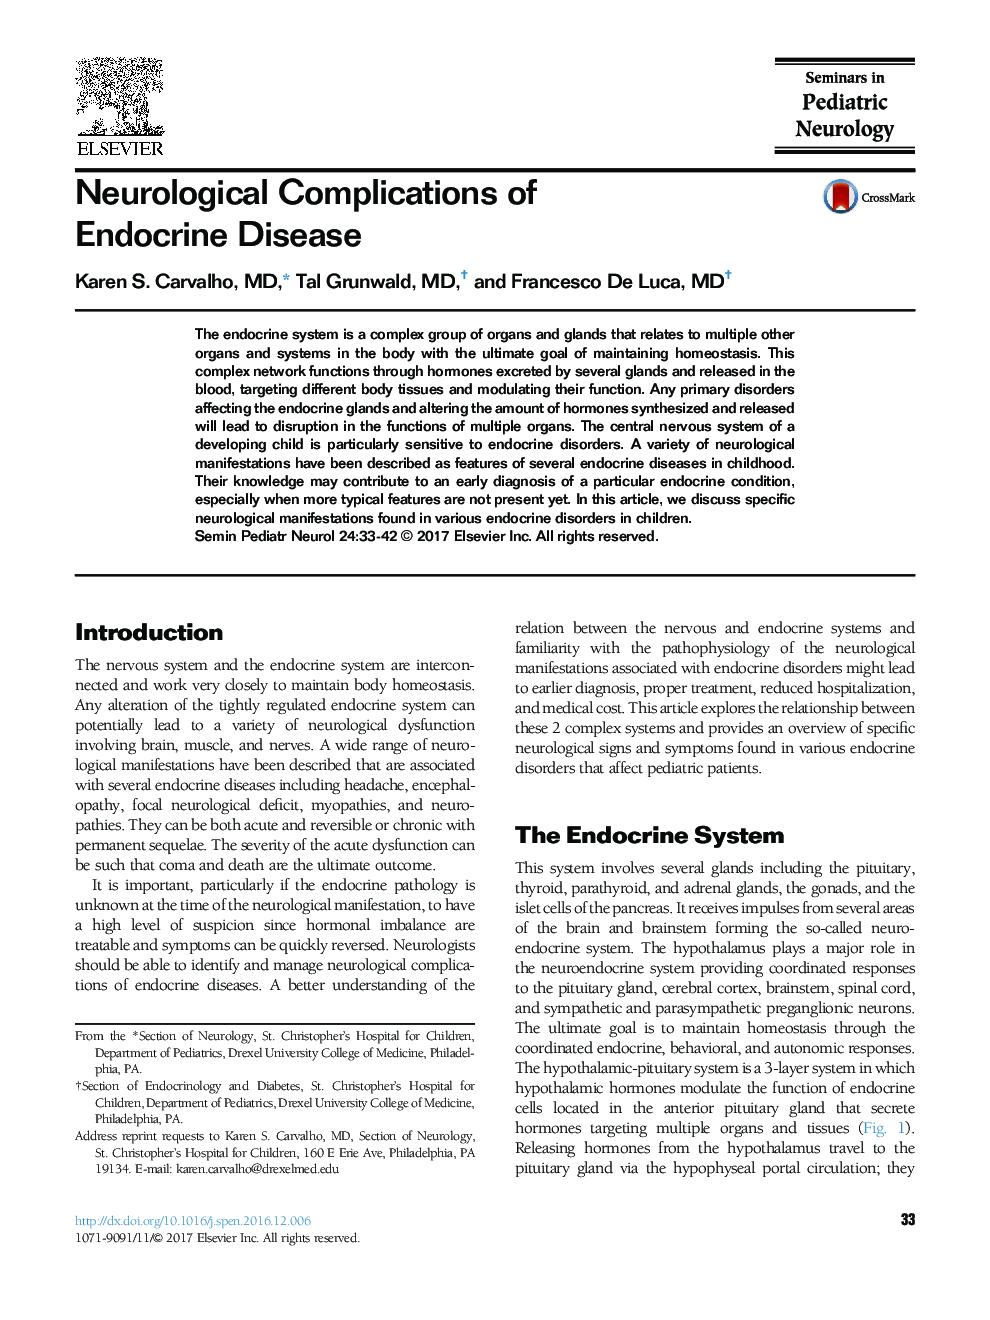 Neurological Complications of Endocrine Disease